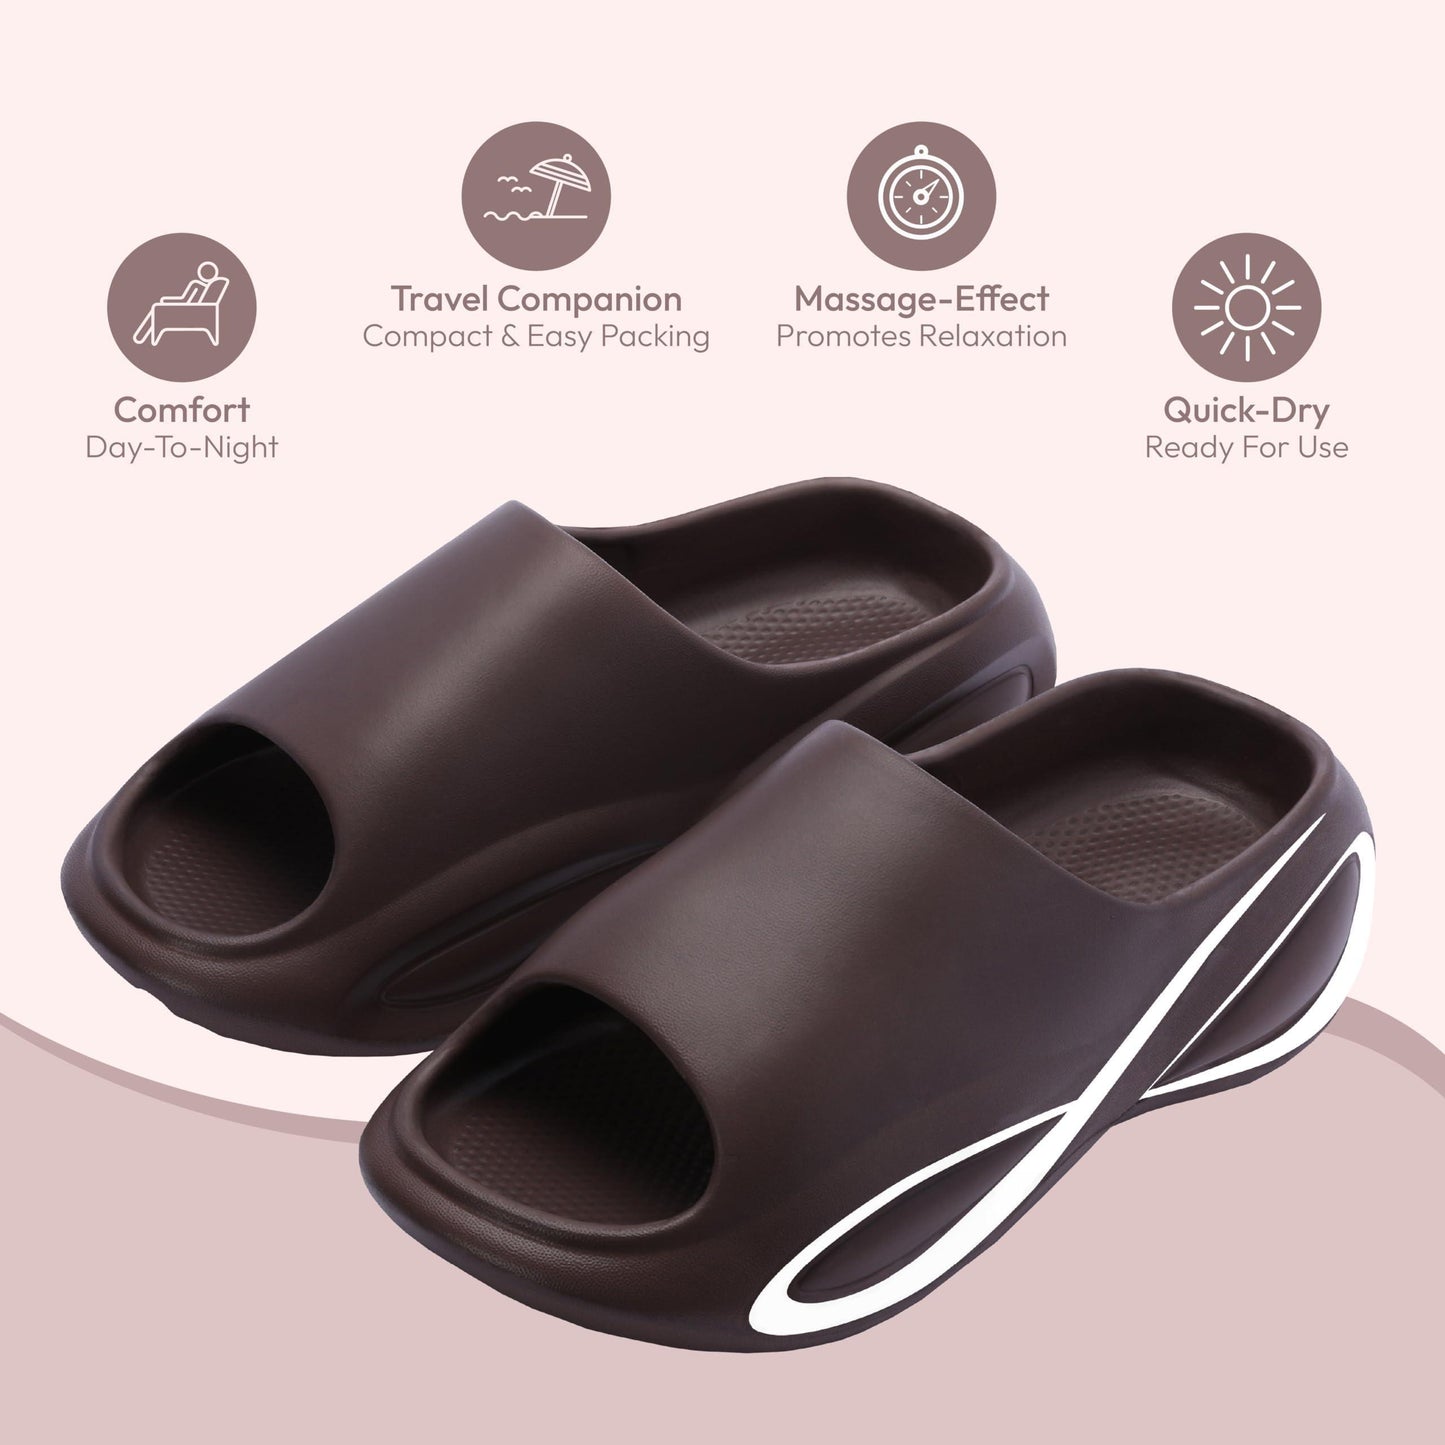 Infinity Slippers for Women Men Adult Stylish Comfortable Non Slip Indoor Outdoor Slides - Loomini